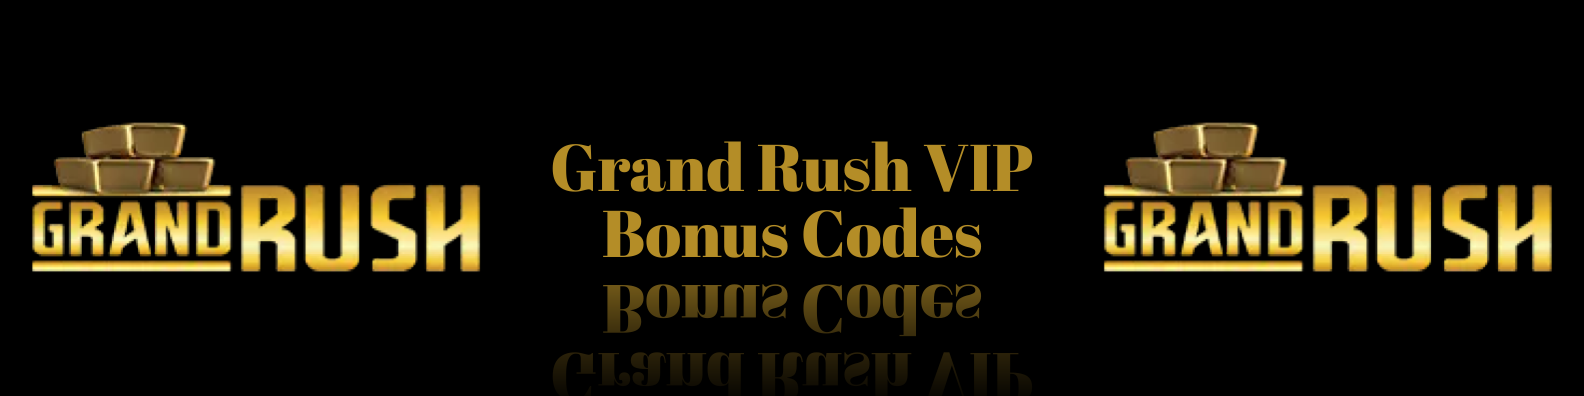 Grand Rush VIP Bonus Codes